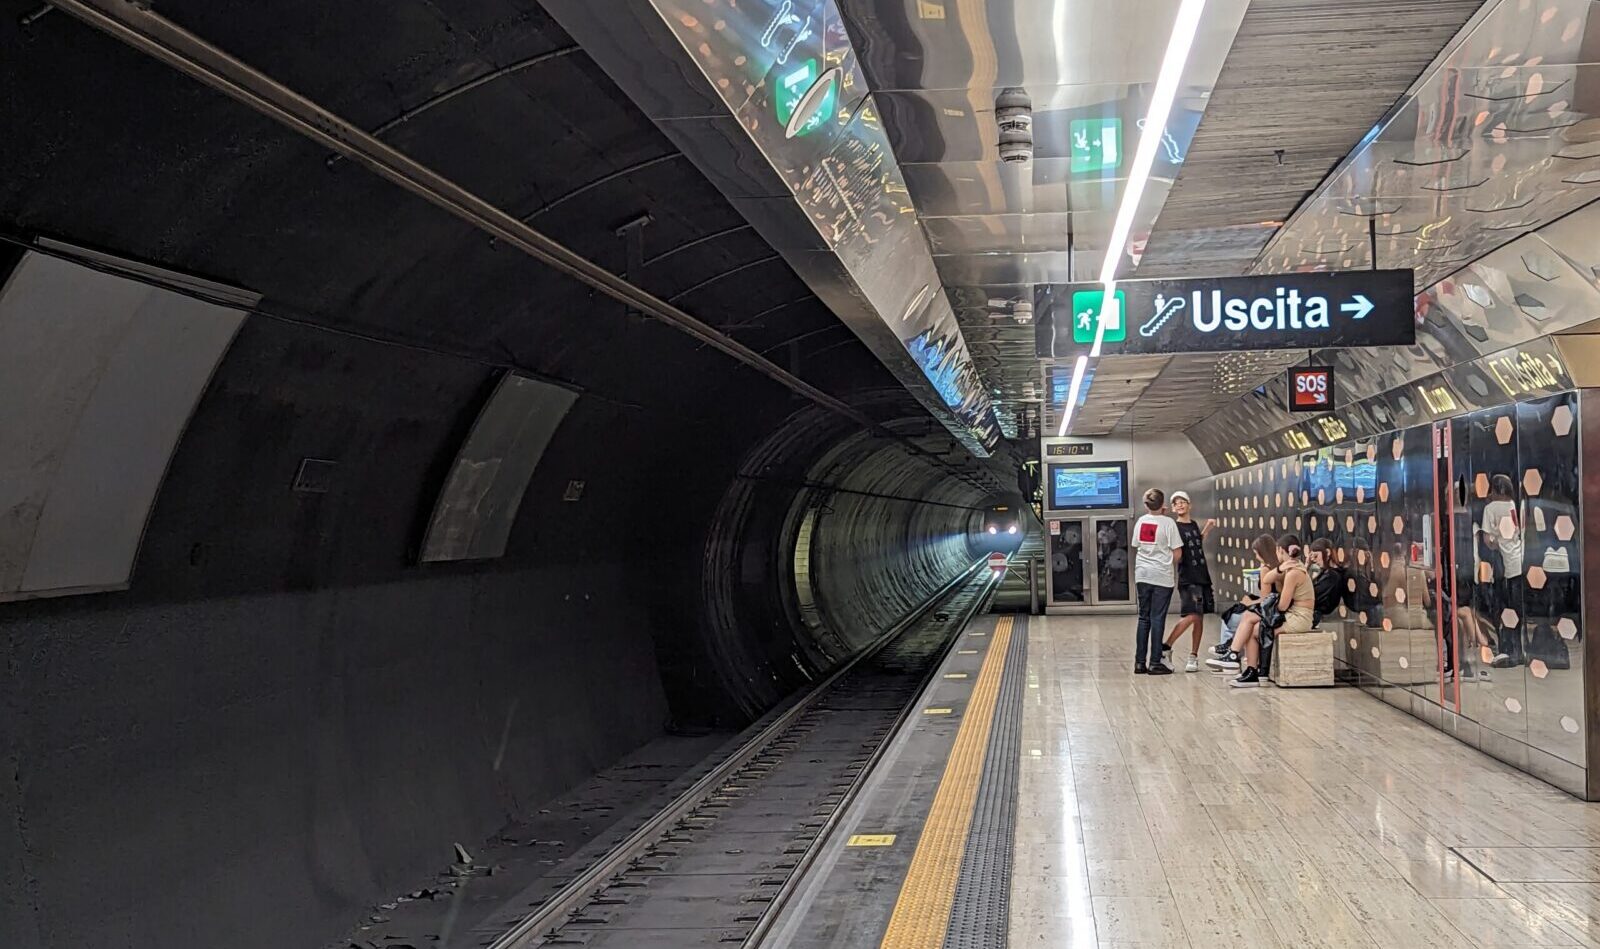 Naples metro line 1, Municipio stop